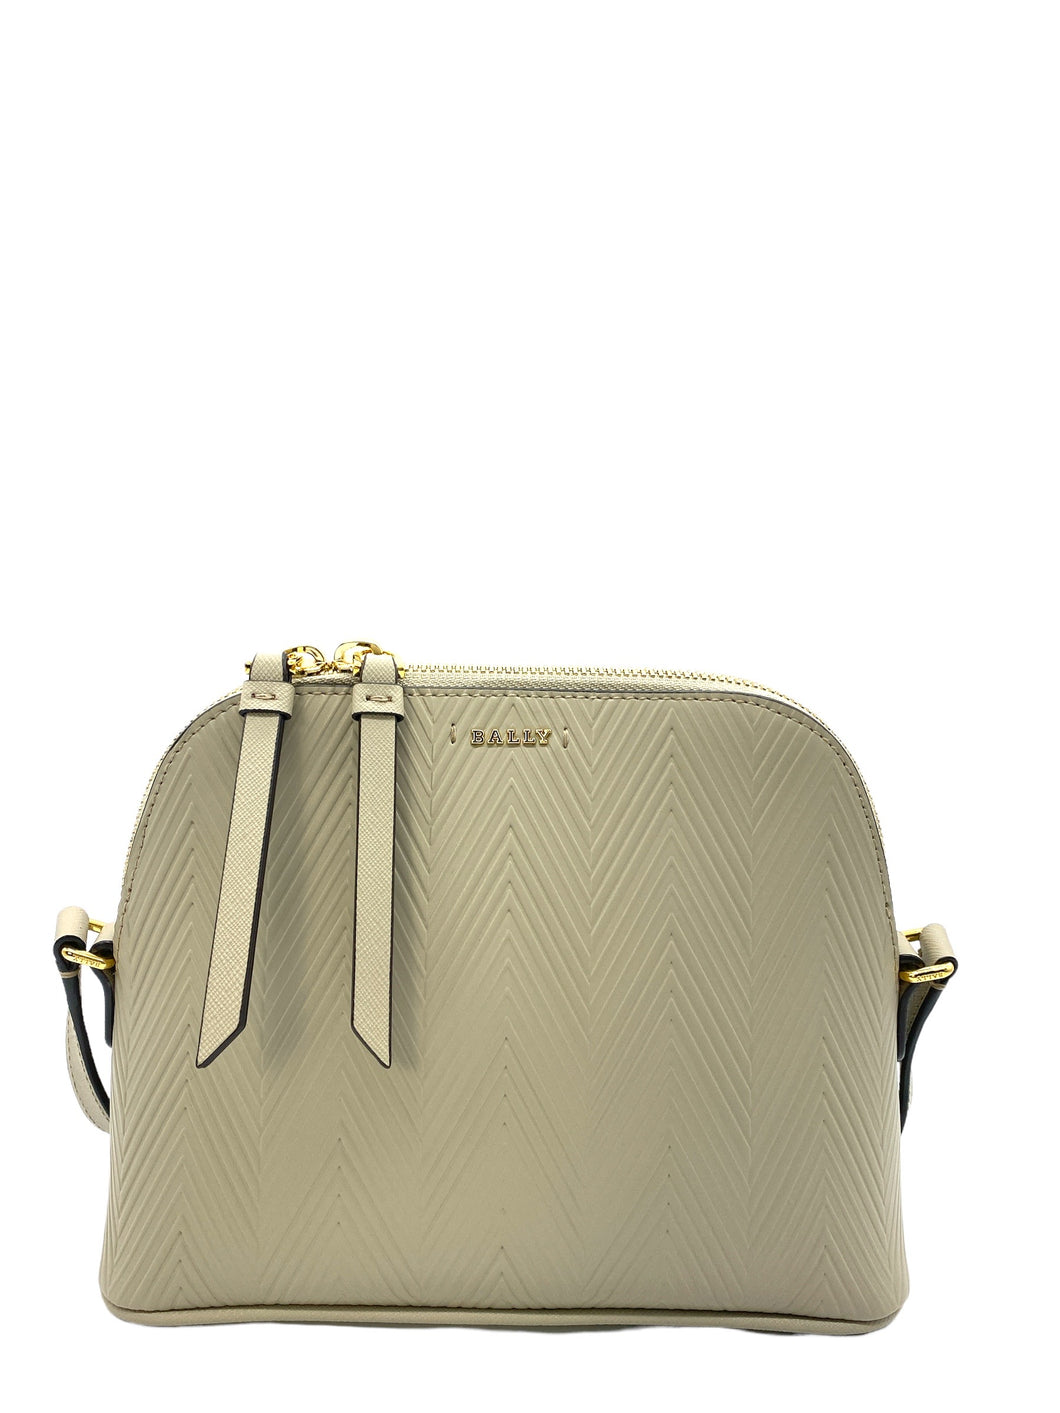 NEW Bally Salmah Women's 6232522 Beige Leather Mini Bag MSRP $650